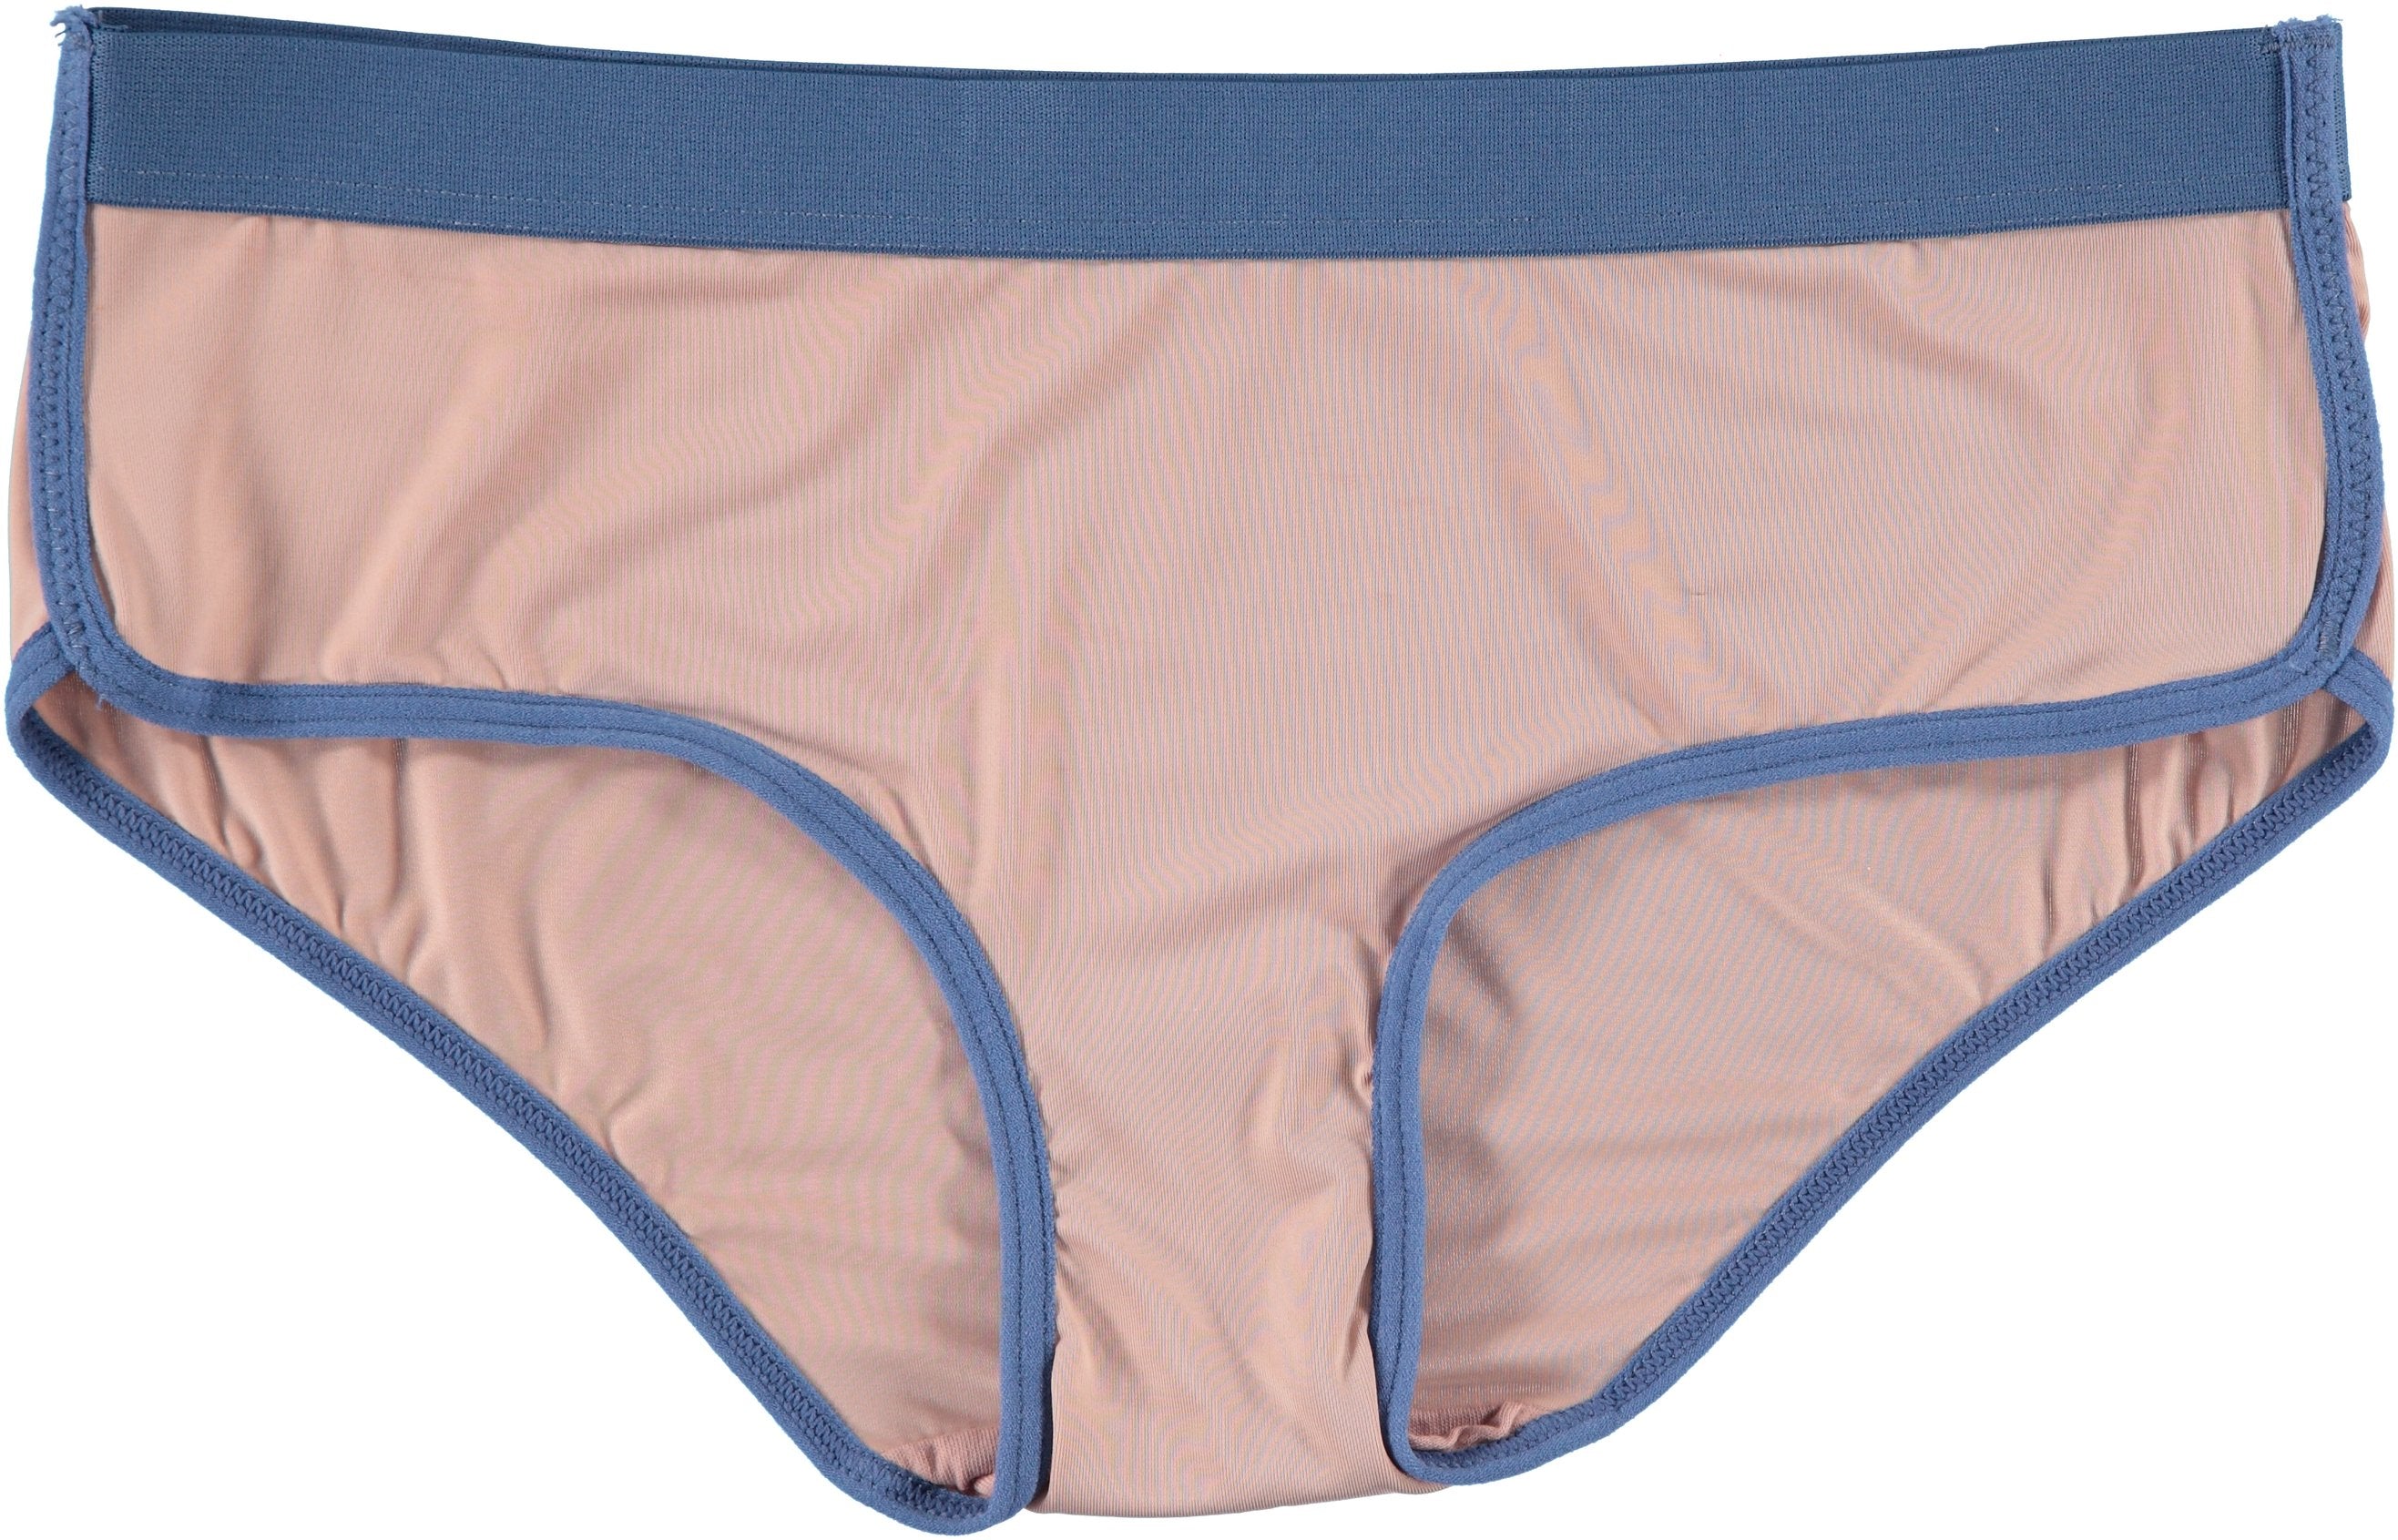 dELiA's Women's Printed/Solid Boyleg Underwear Panty Pack, Soft